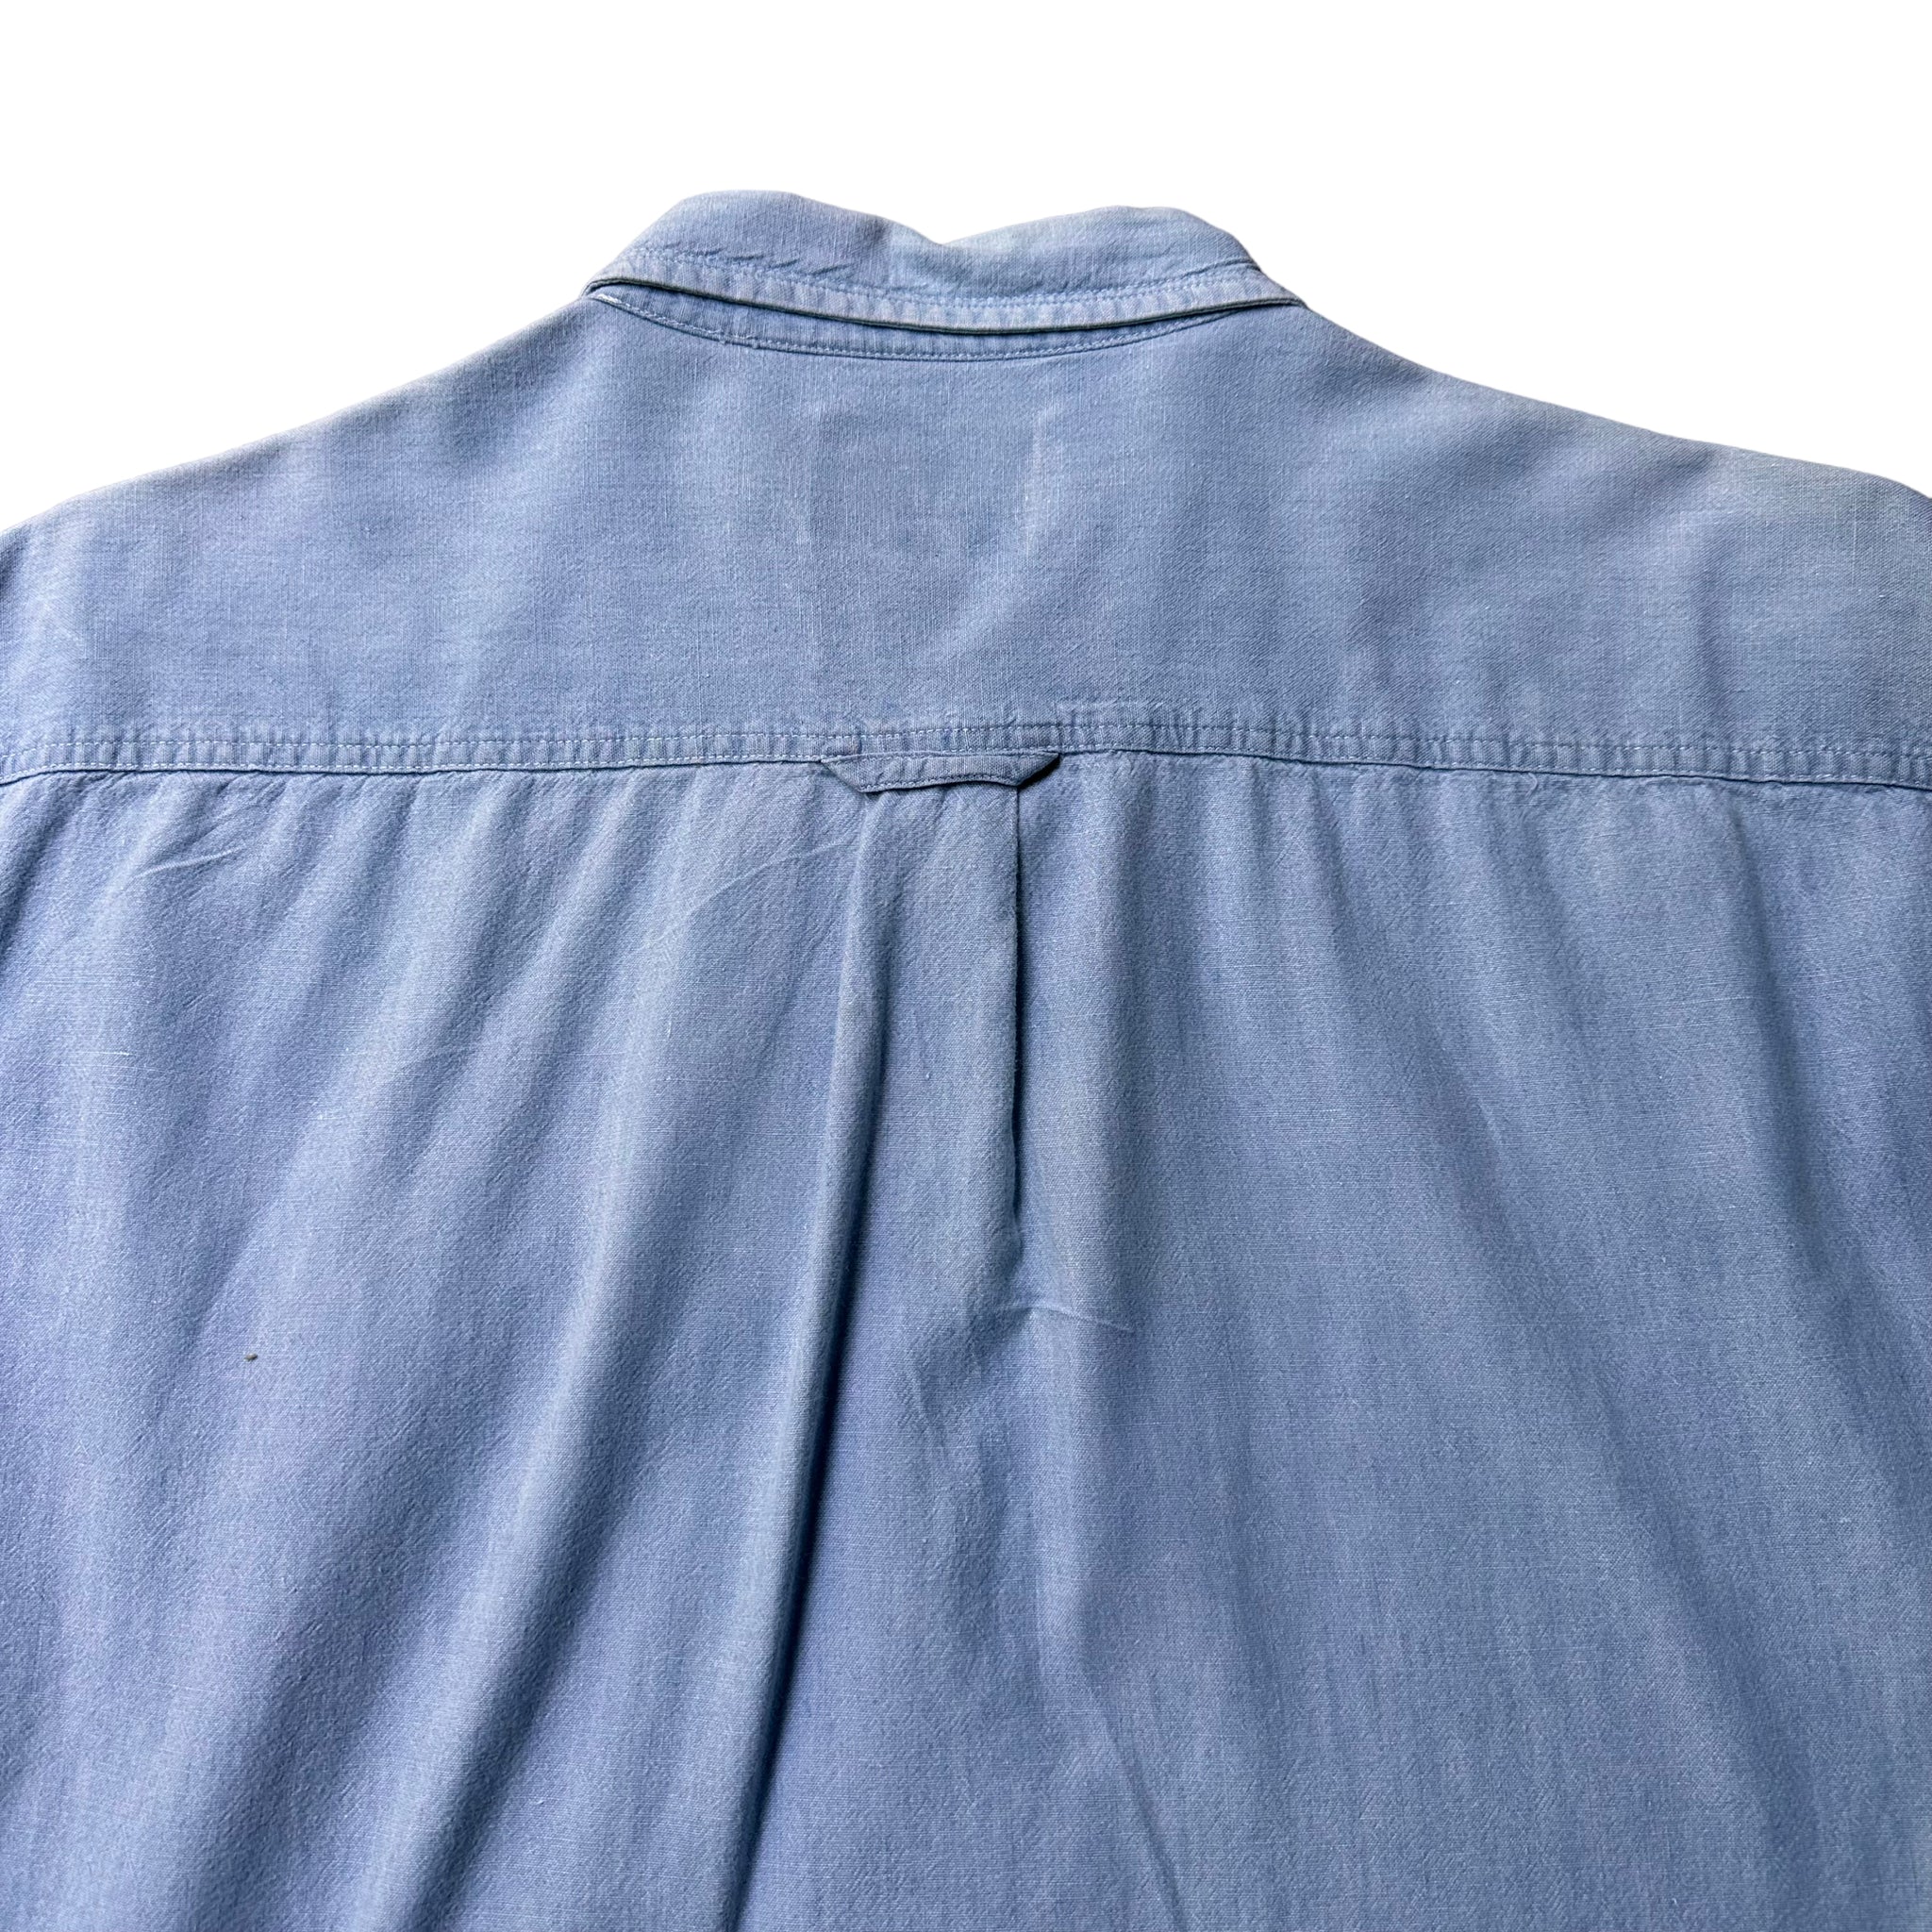 90s Dockers burton down shirt XL